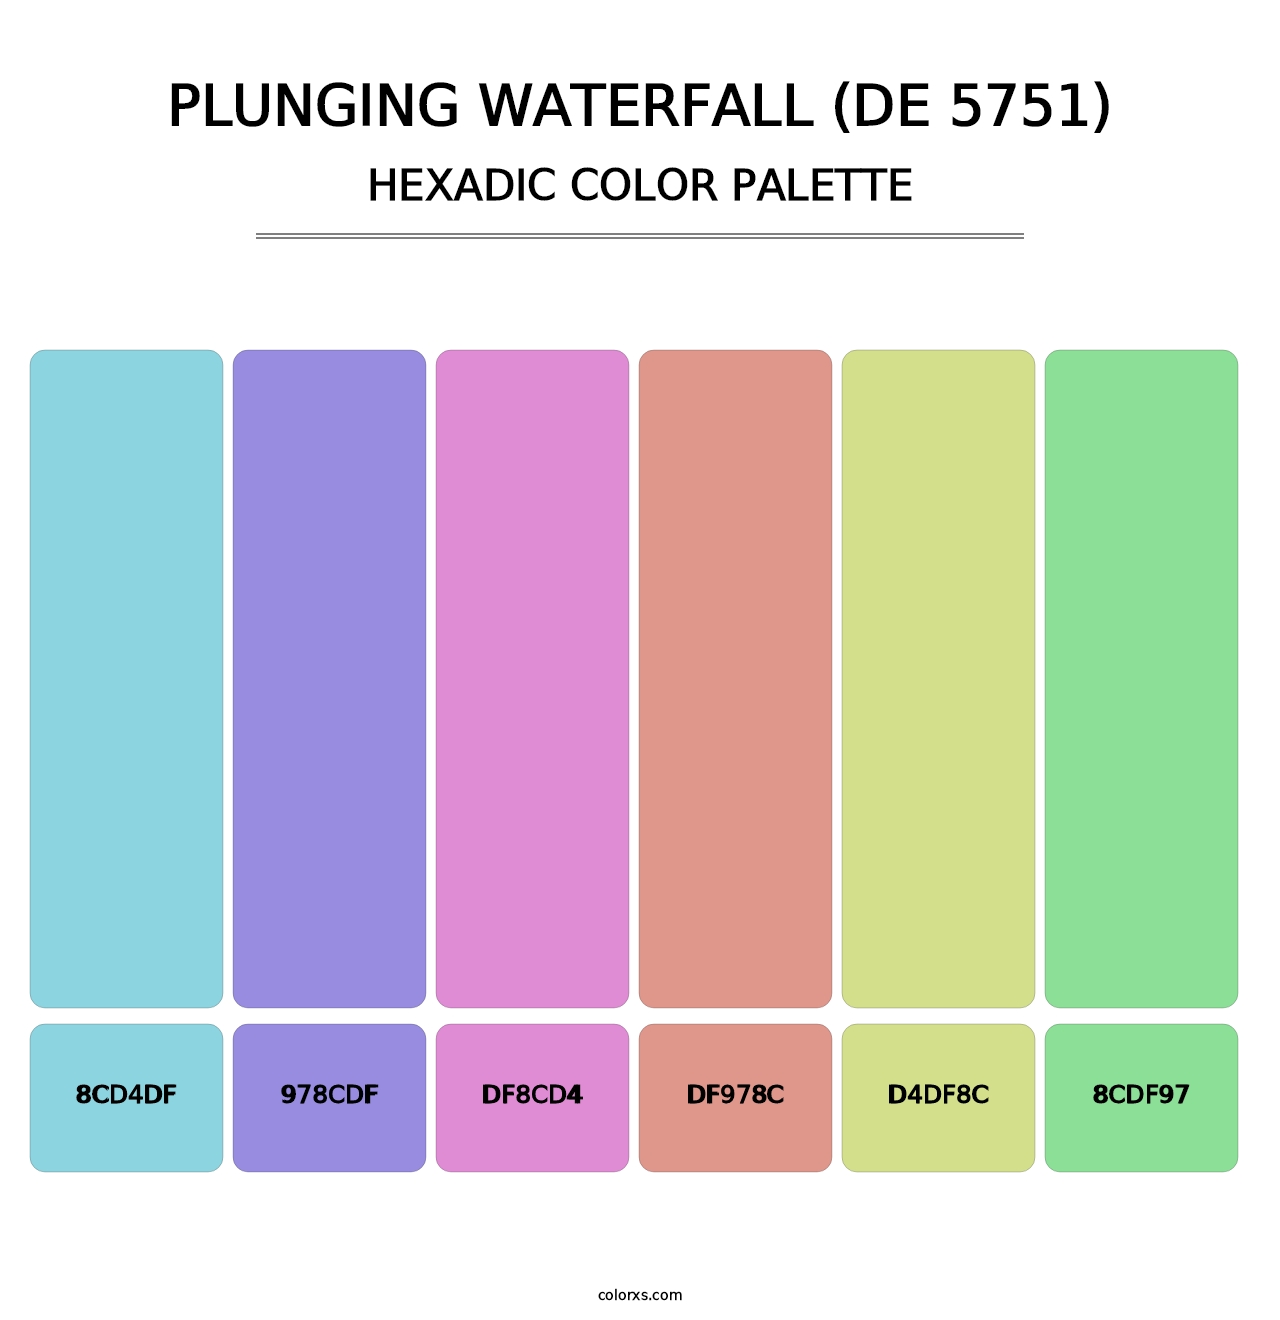 Plunging Waterfall (DE 5751) - Hexadic Color Palette